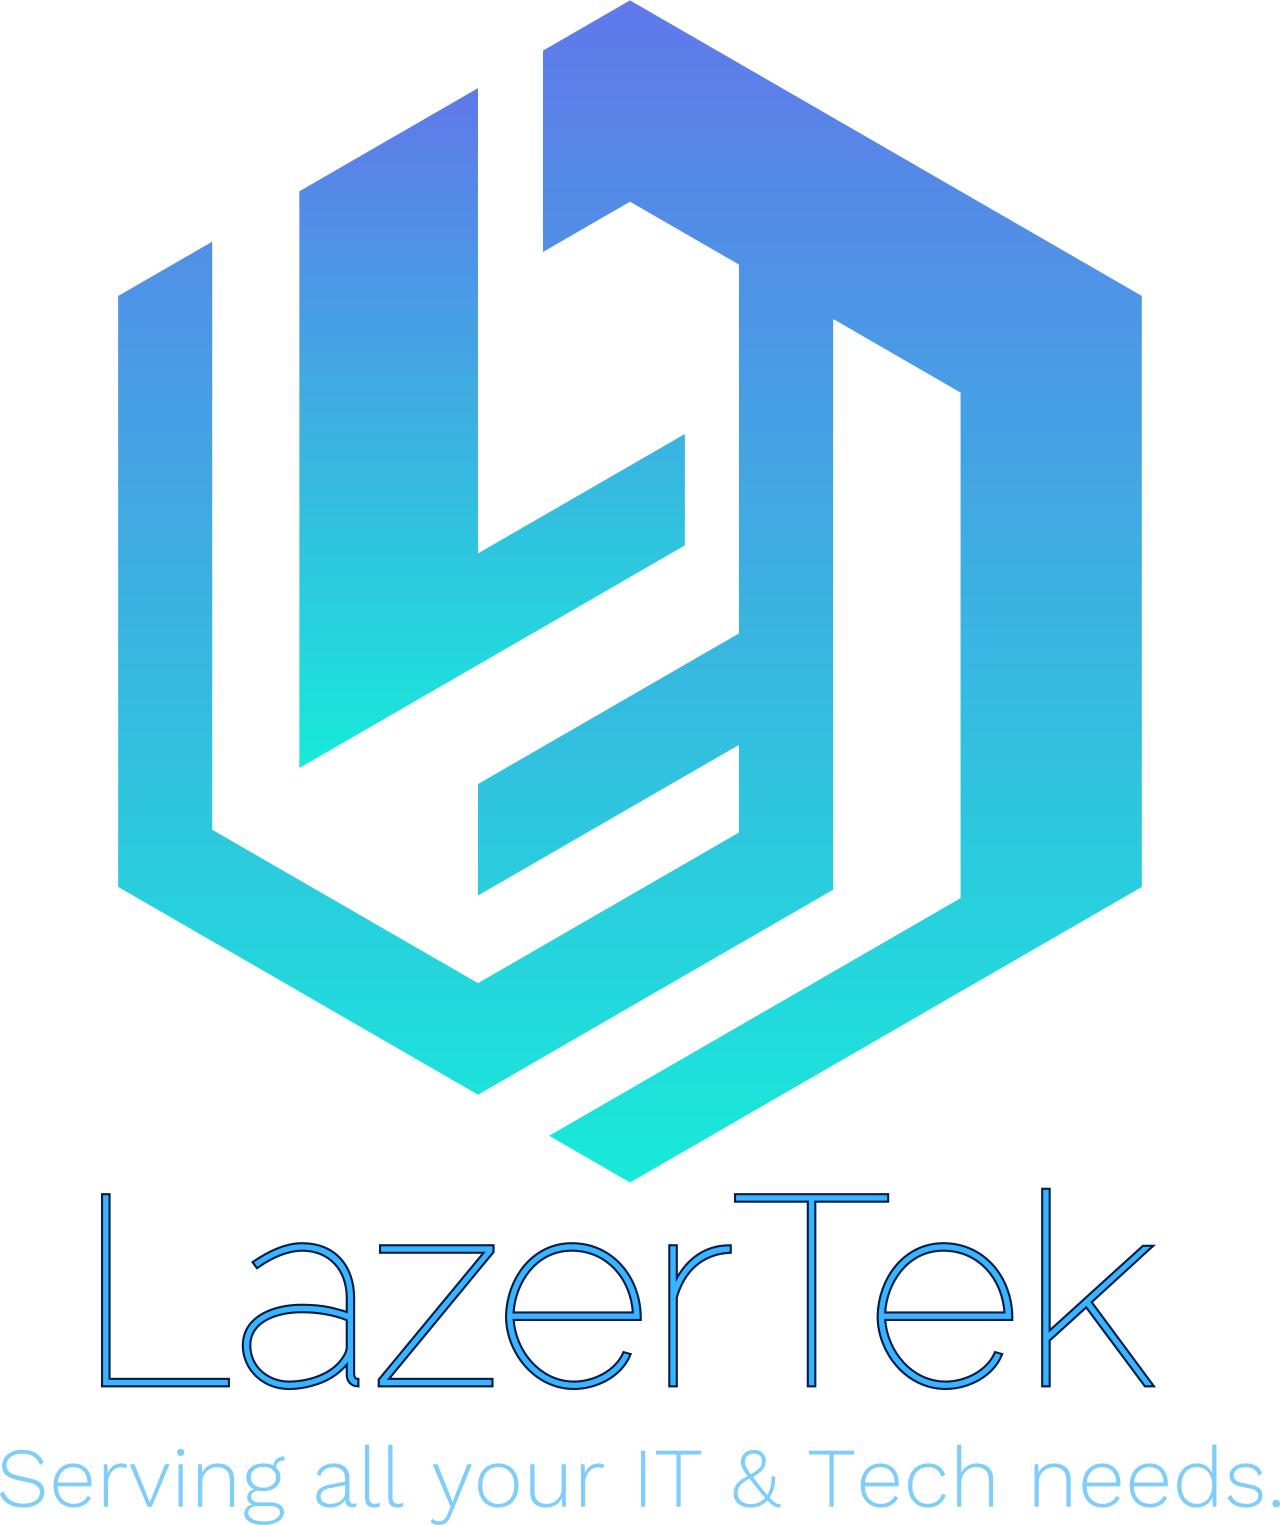 LazerTek's logo